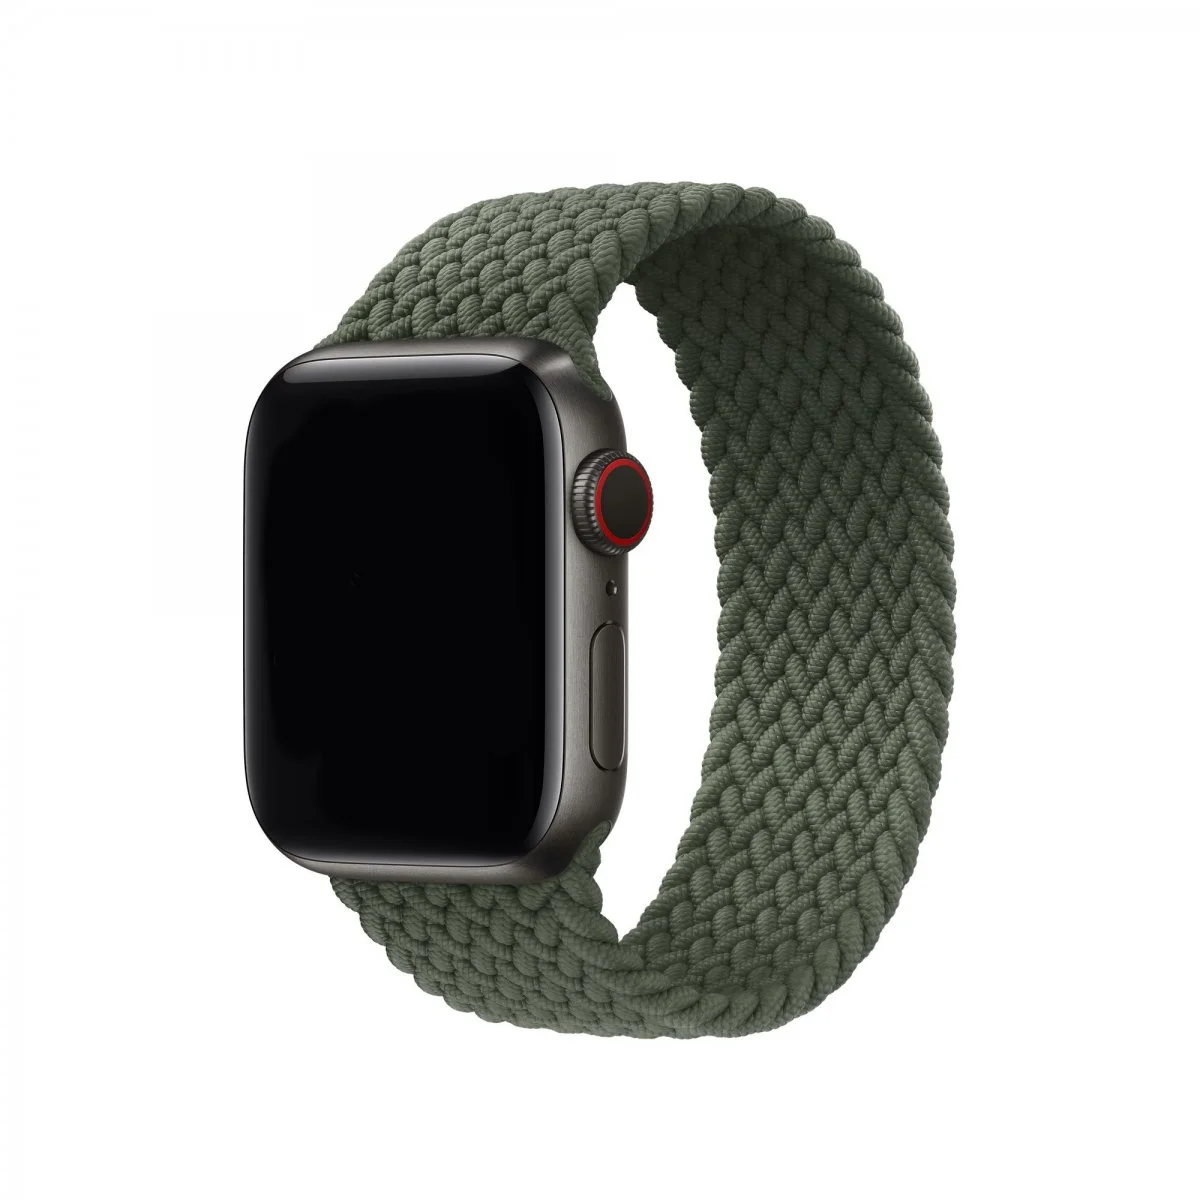 Řemínek iMore Braided Solo Loop Apple Watch Series 1/2/3 42mm - tmavě zelený (S)